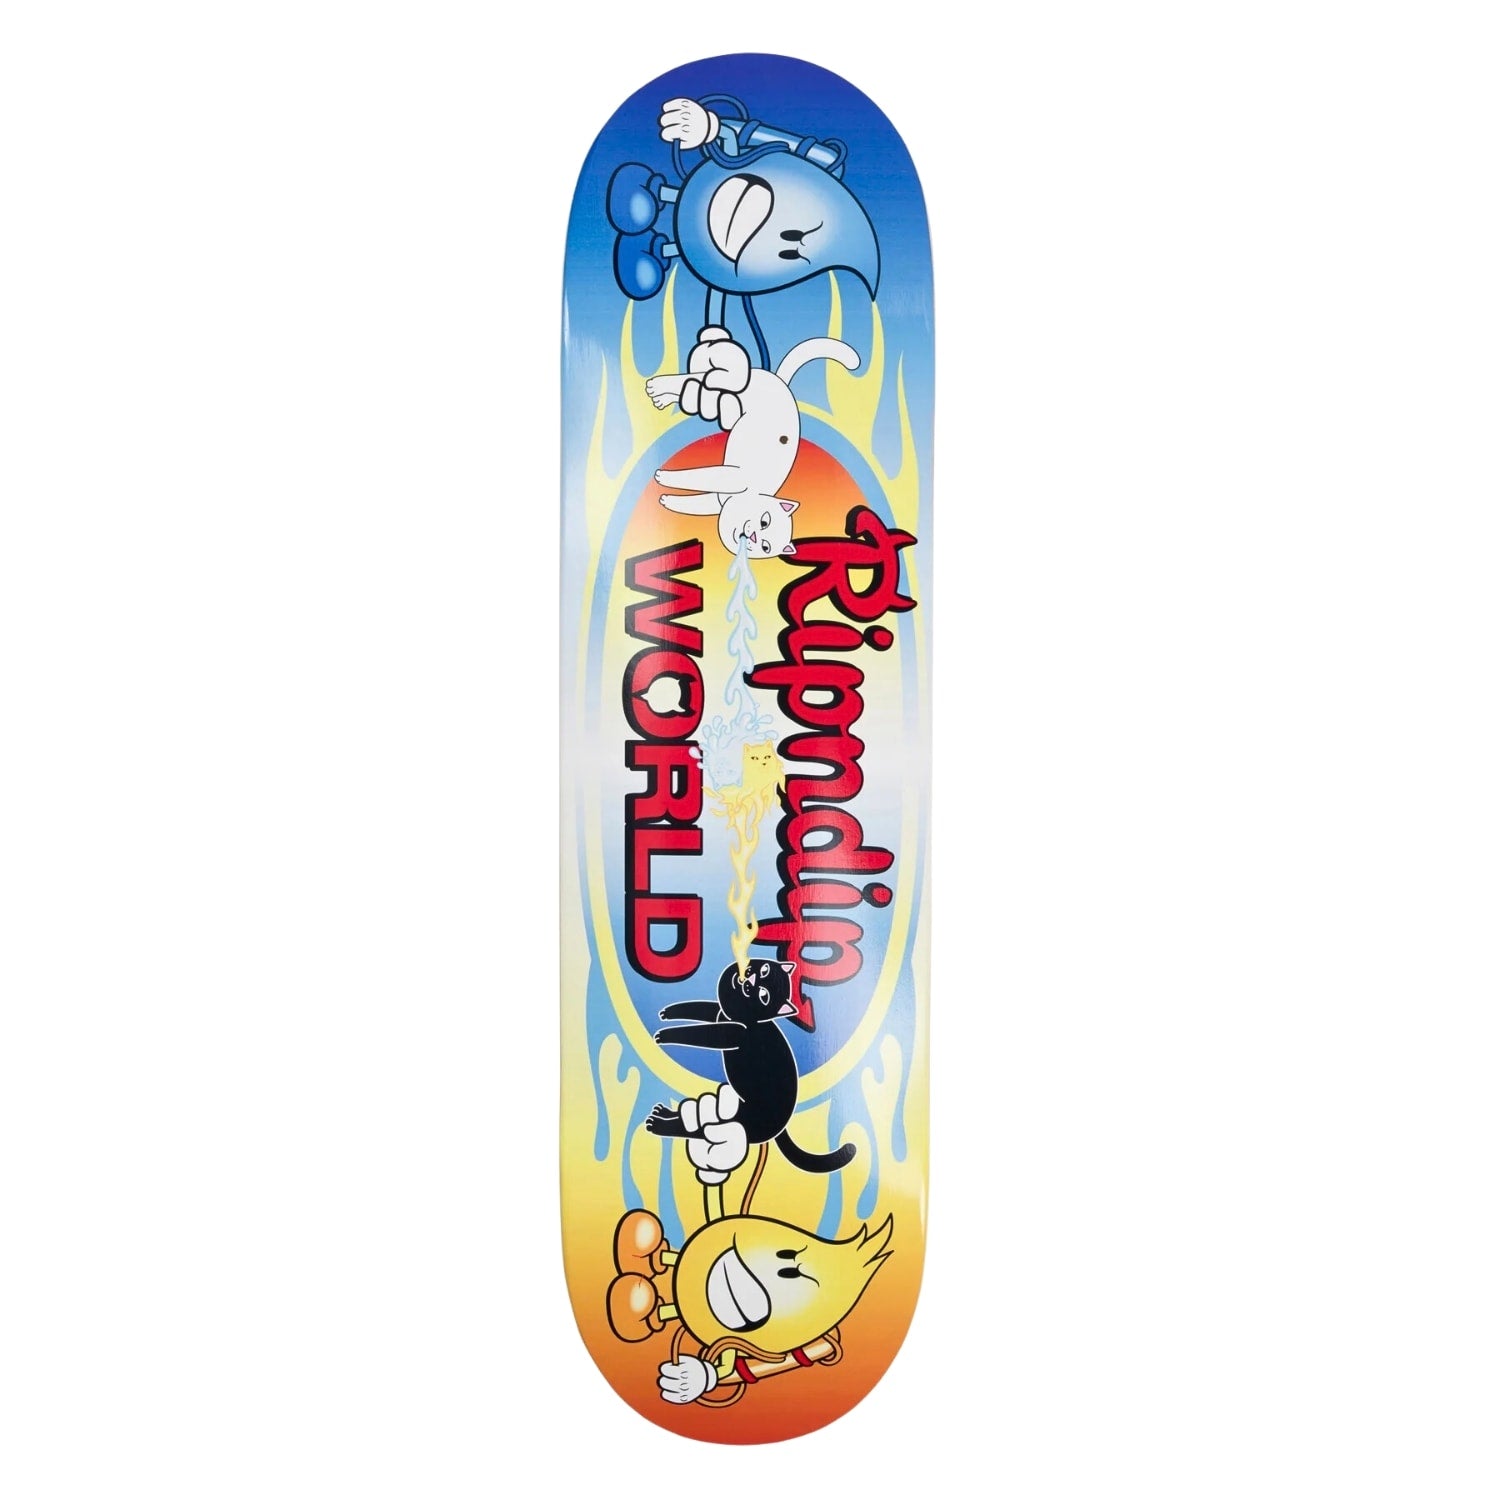 Ripndip 8.25" Water & Fire Skate Deck - Multi - Skateboard Deck by RIPNDIP 8.25 inch